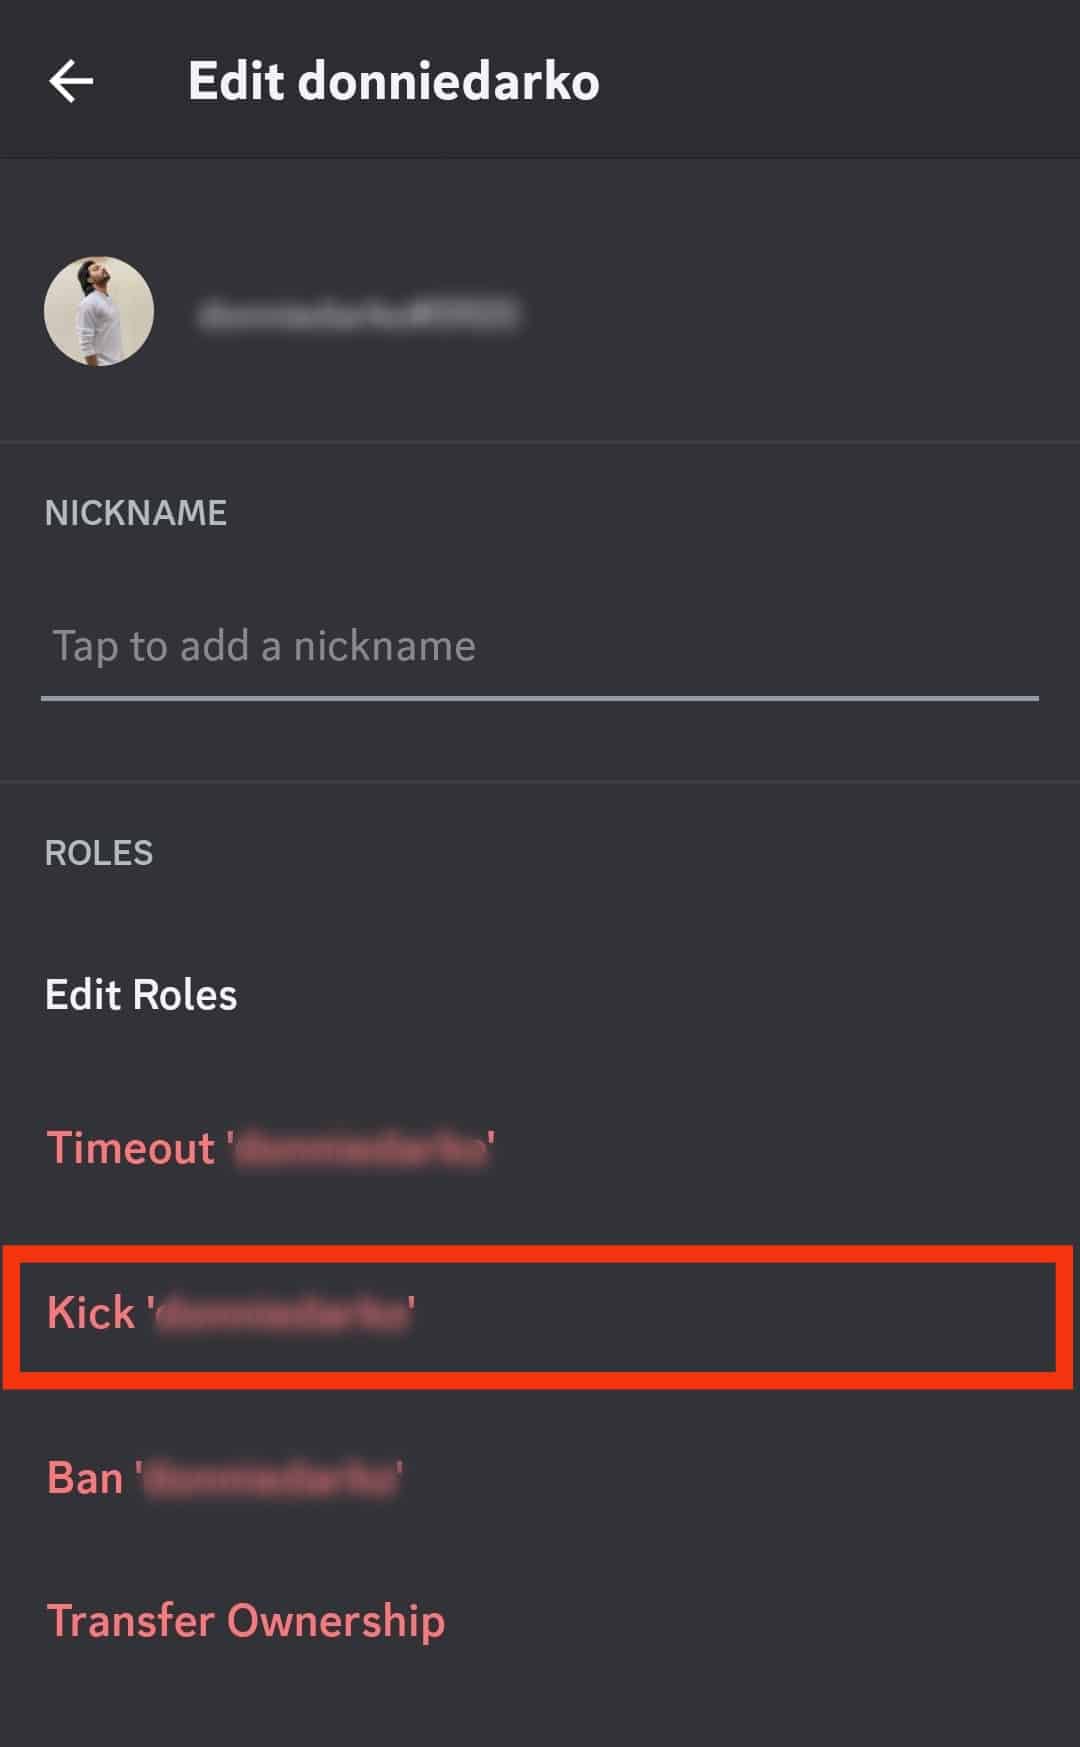 Tap On Kick [Username]